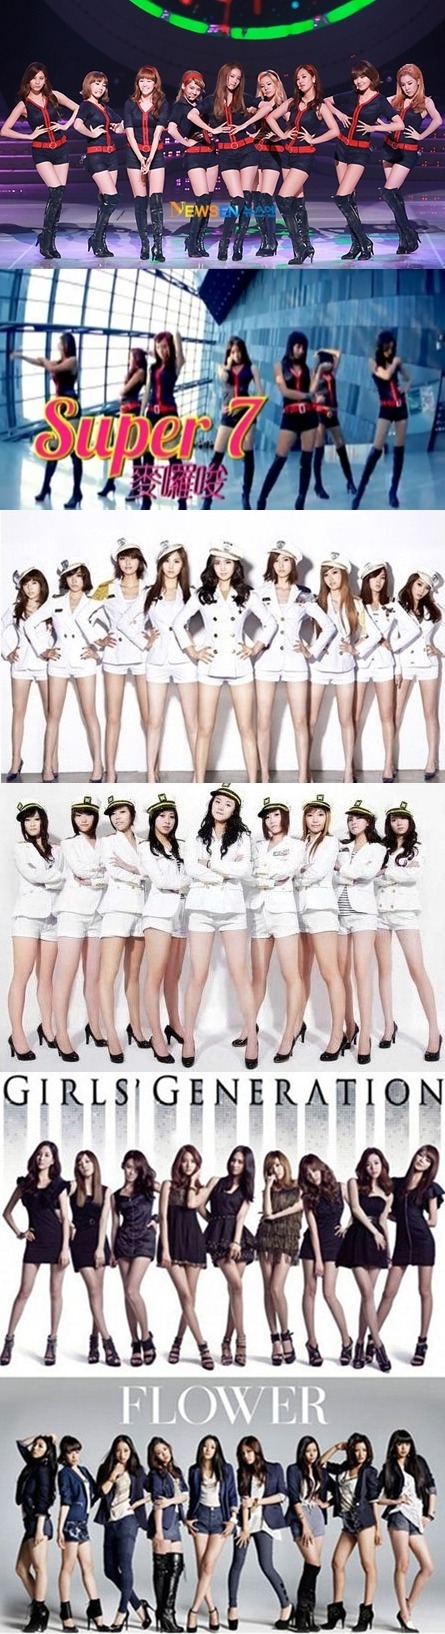 201110211218031001_1.jpg : 대만의 소녀시대.swf